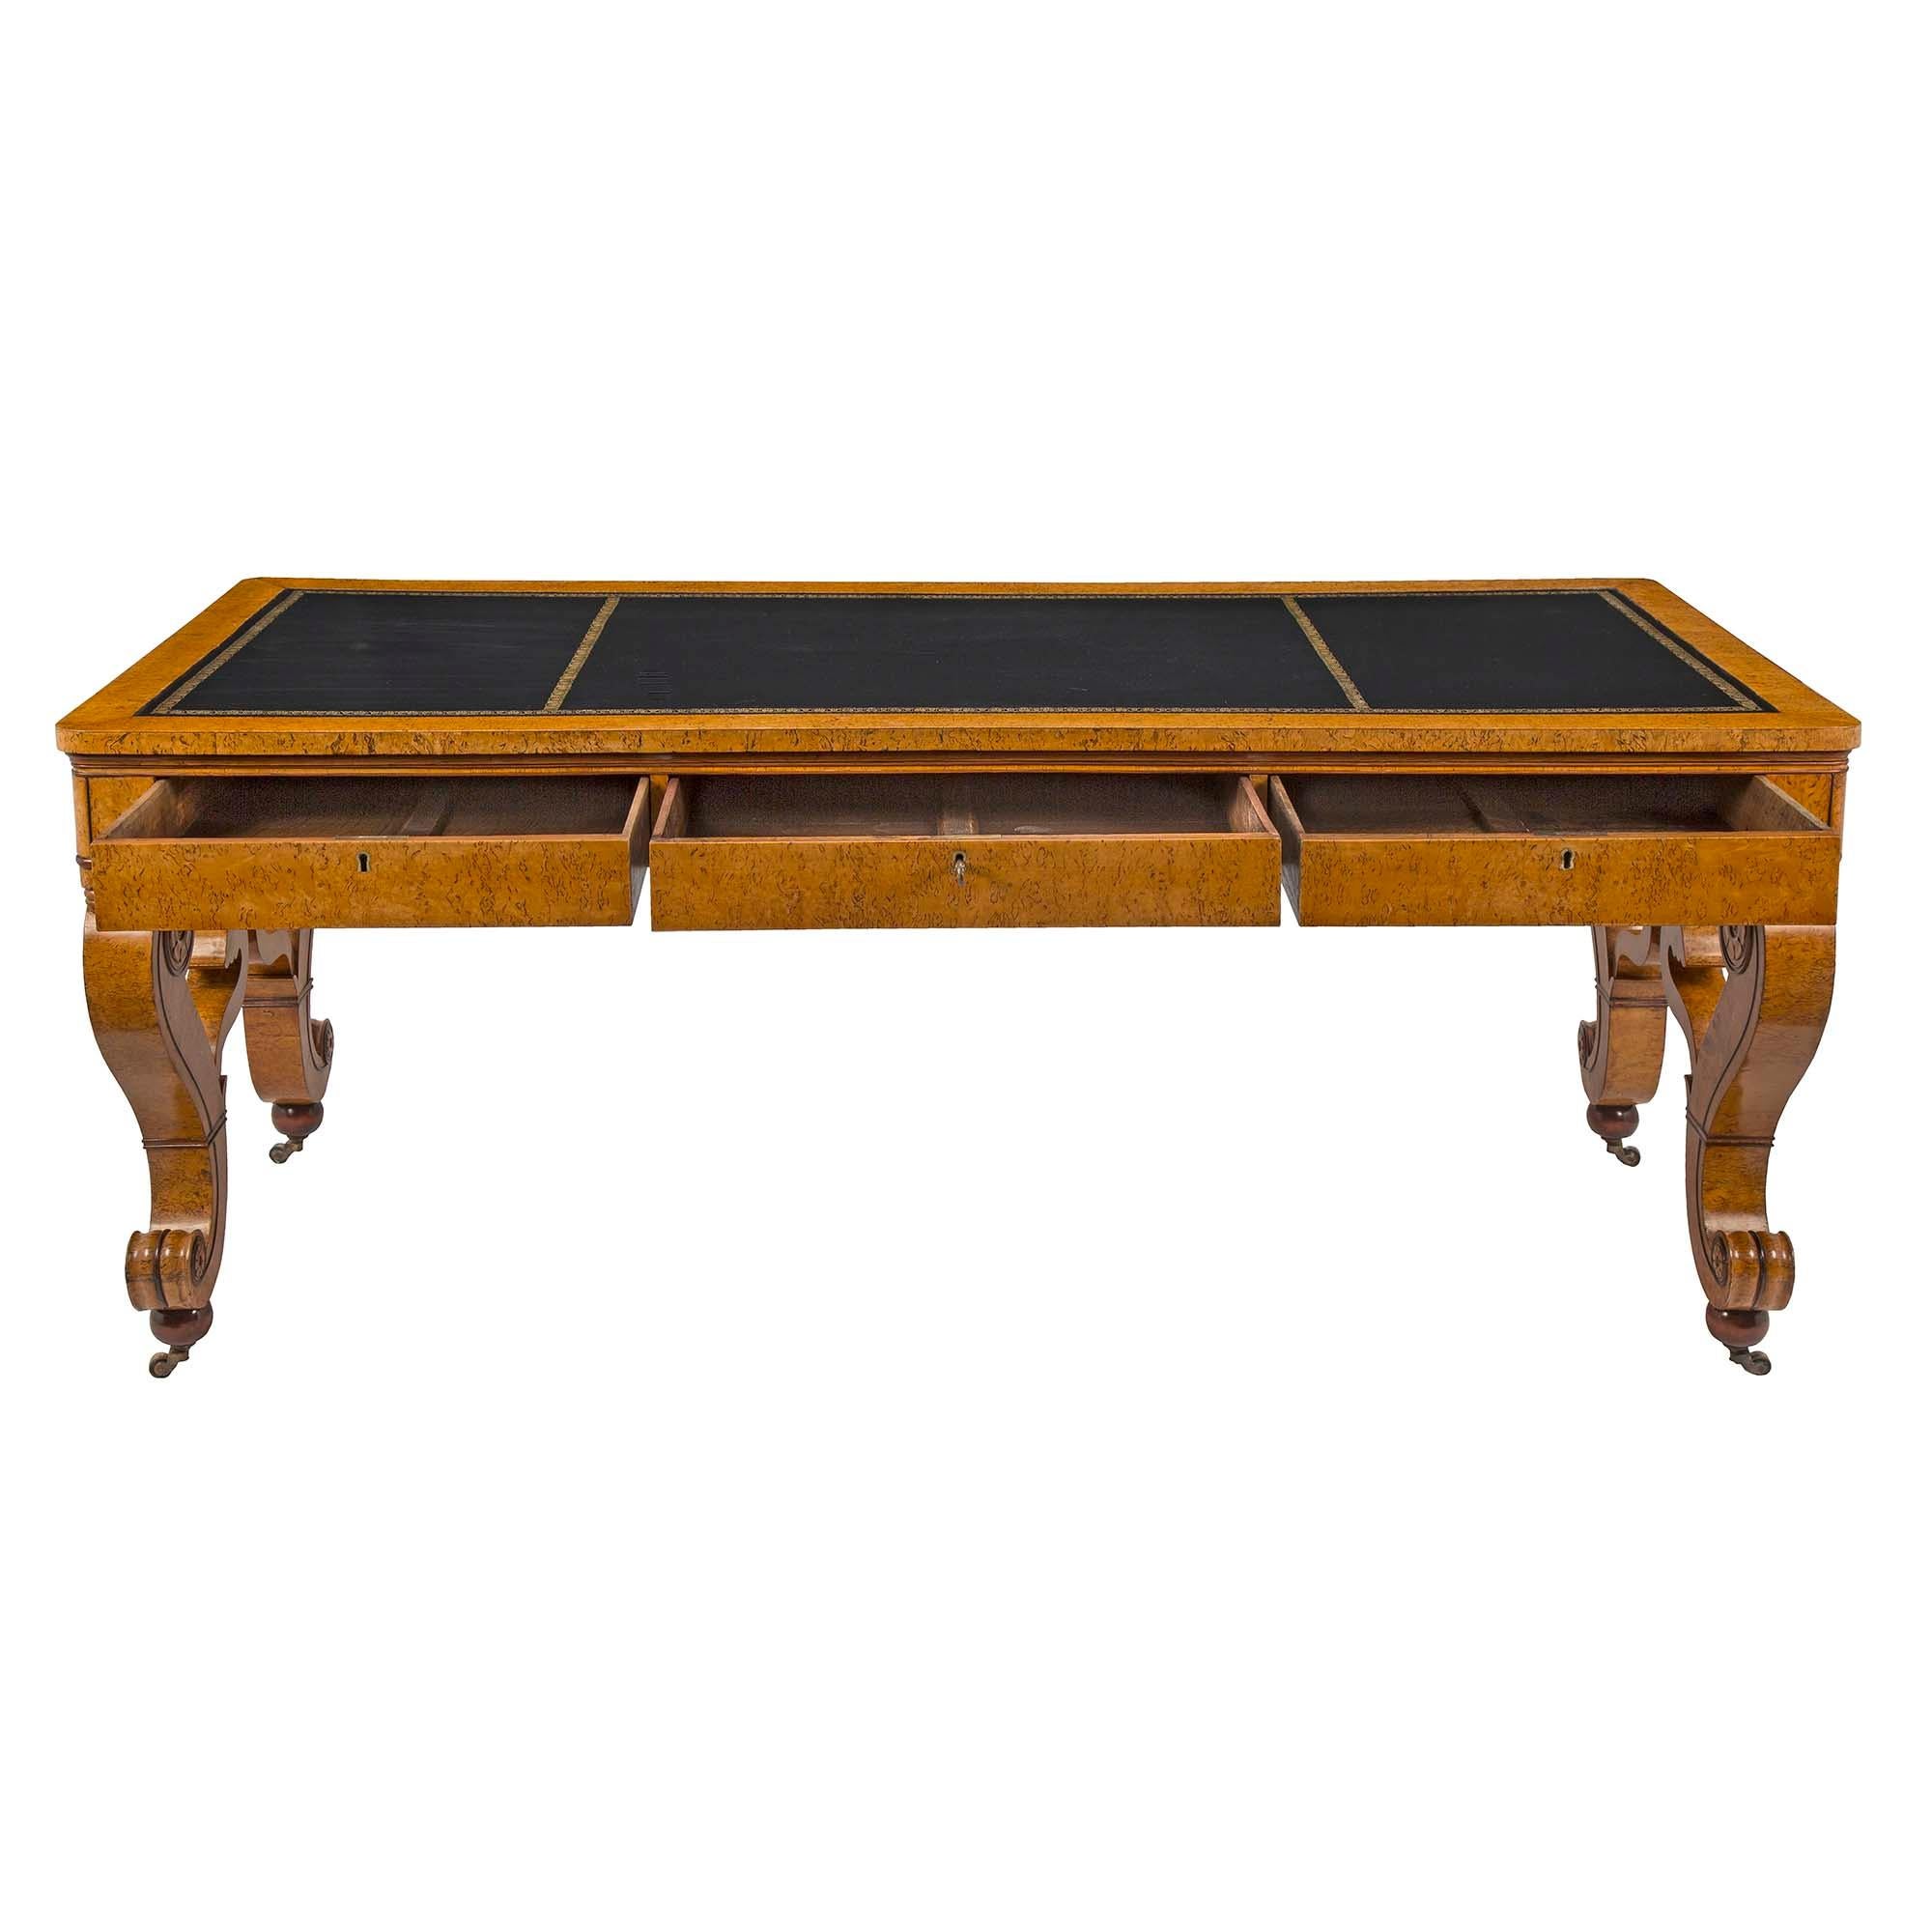 Unknown Continental 19th Century Burl Maple Biedermeier Desk or Center Table For Sale